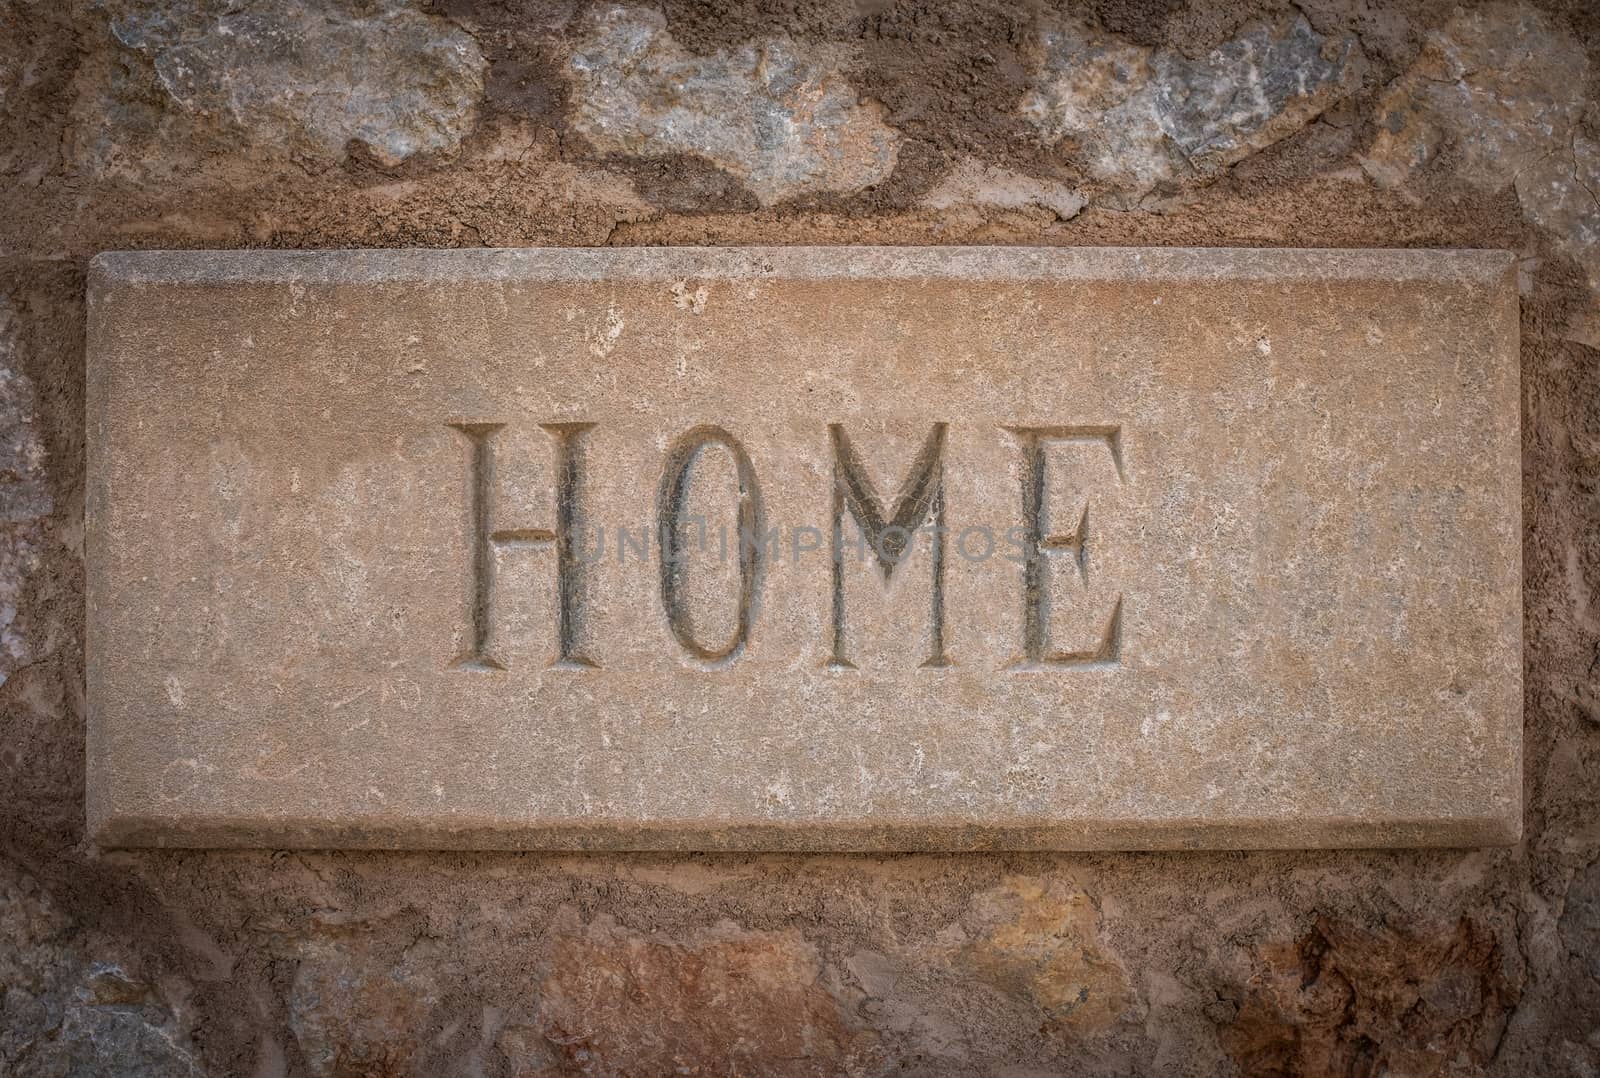 Spanish Villa Stone Home Sign by mrdoomits